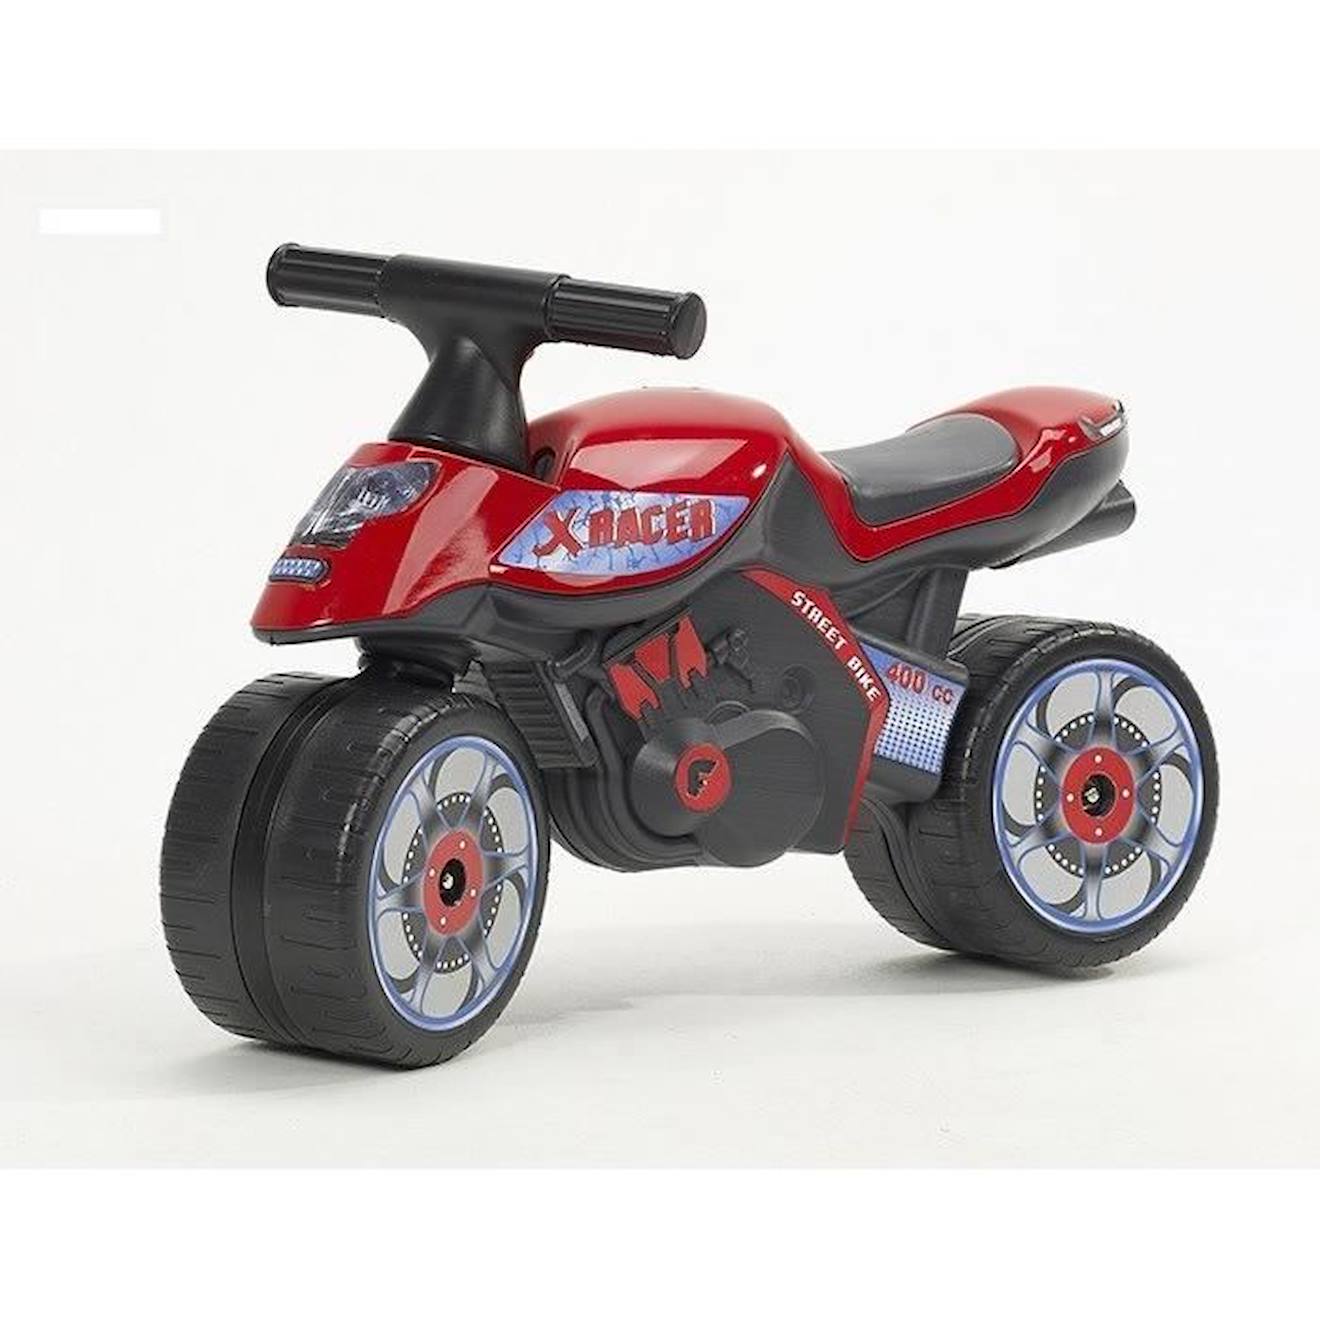 Porteur Baby Moto X Racer - Falk - Draisienne - Allure Sportive - Larges Roues - Rouge Rouge